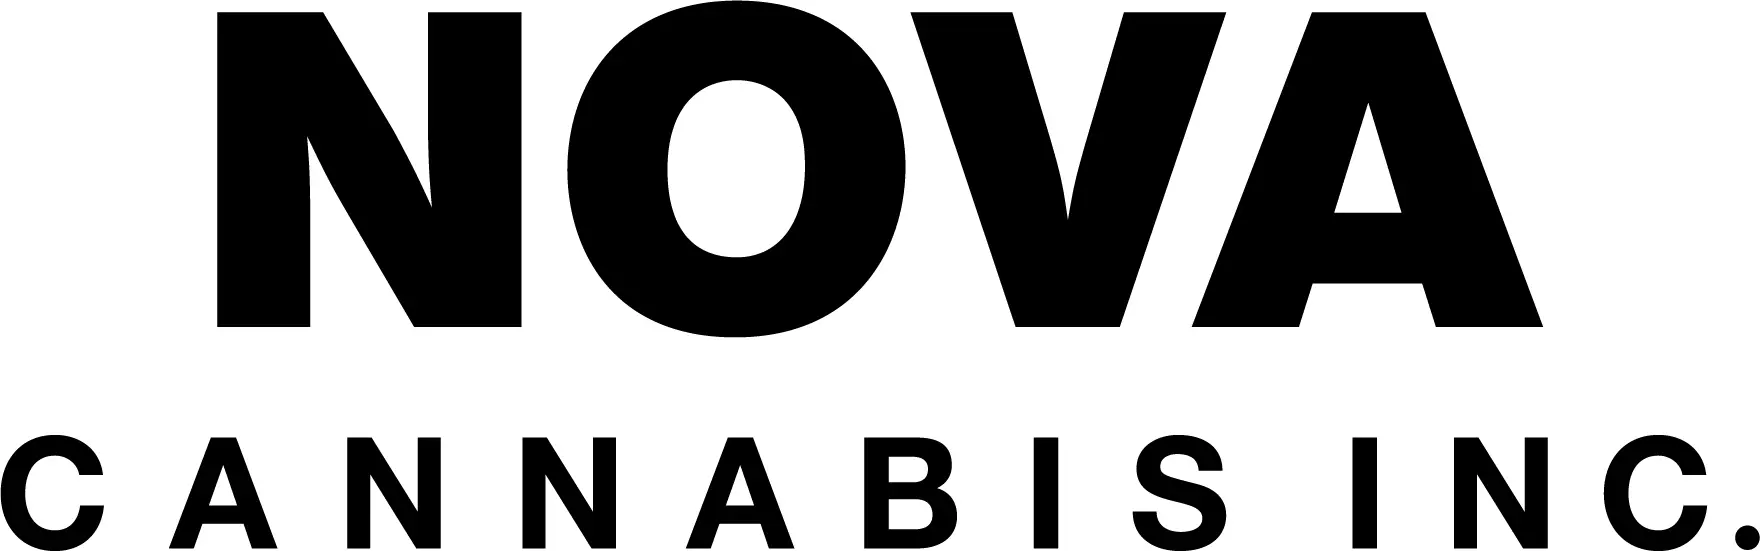 logo - What happened to Nova Cannabis? - GasDank Comparison